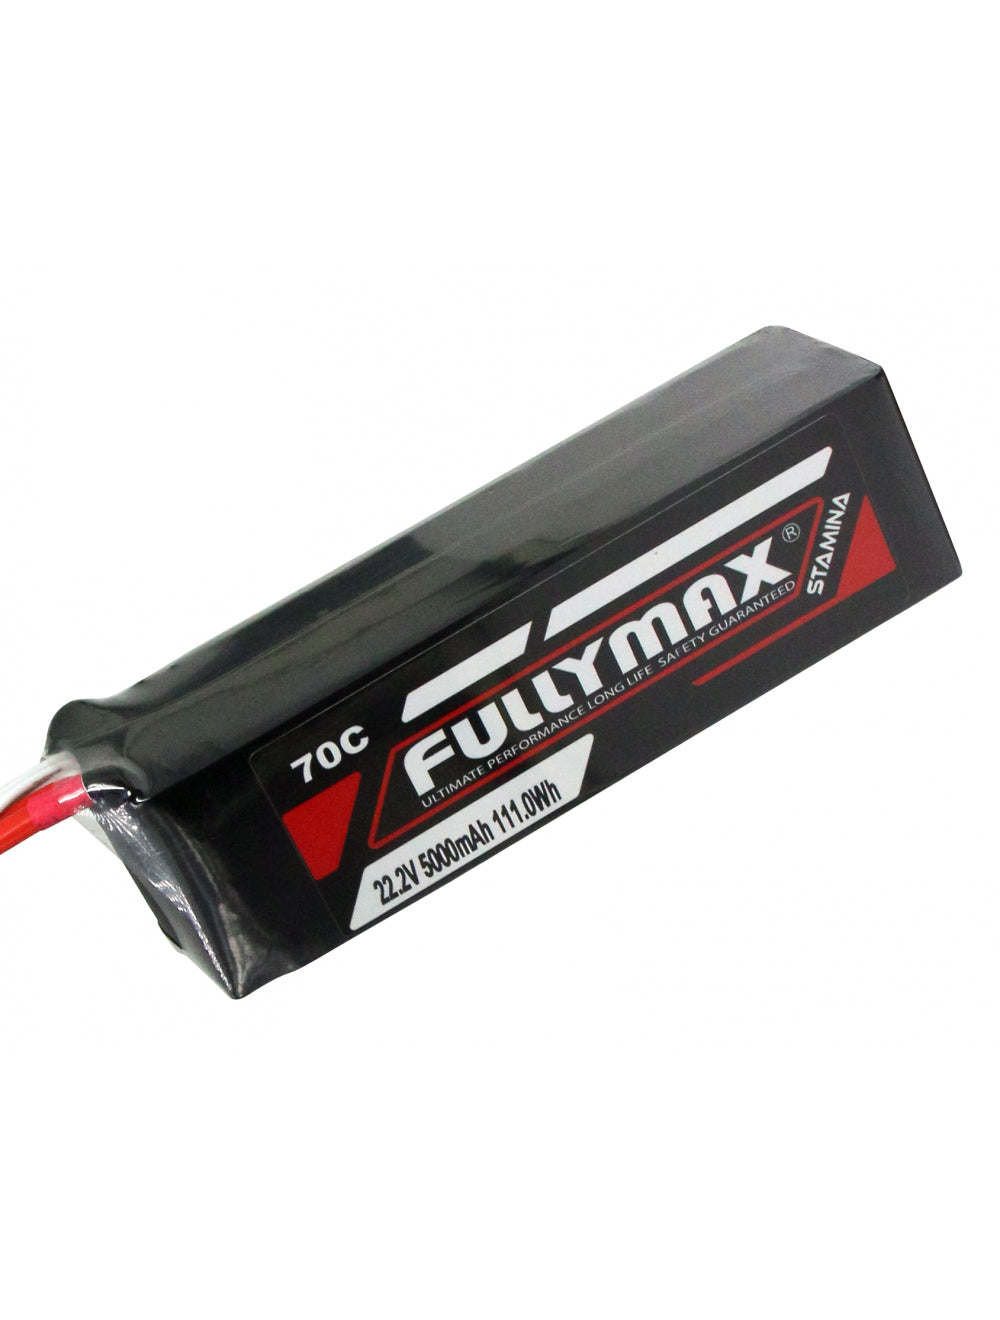 Overlander Fullymax 5000mAh 22.2V 6S 70C LiPo Battery - No Connector 3442